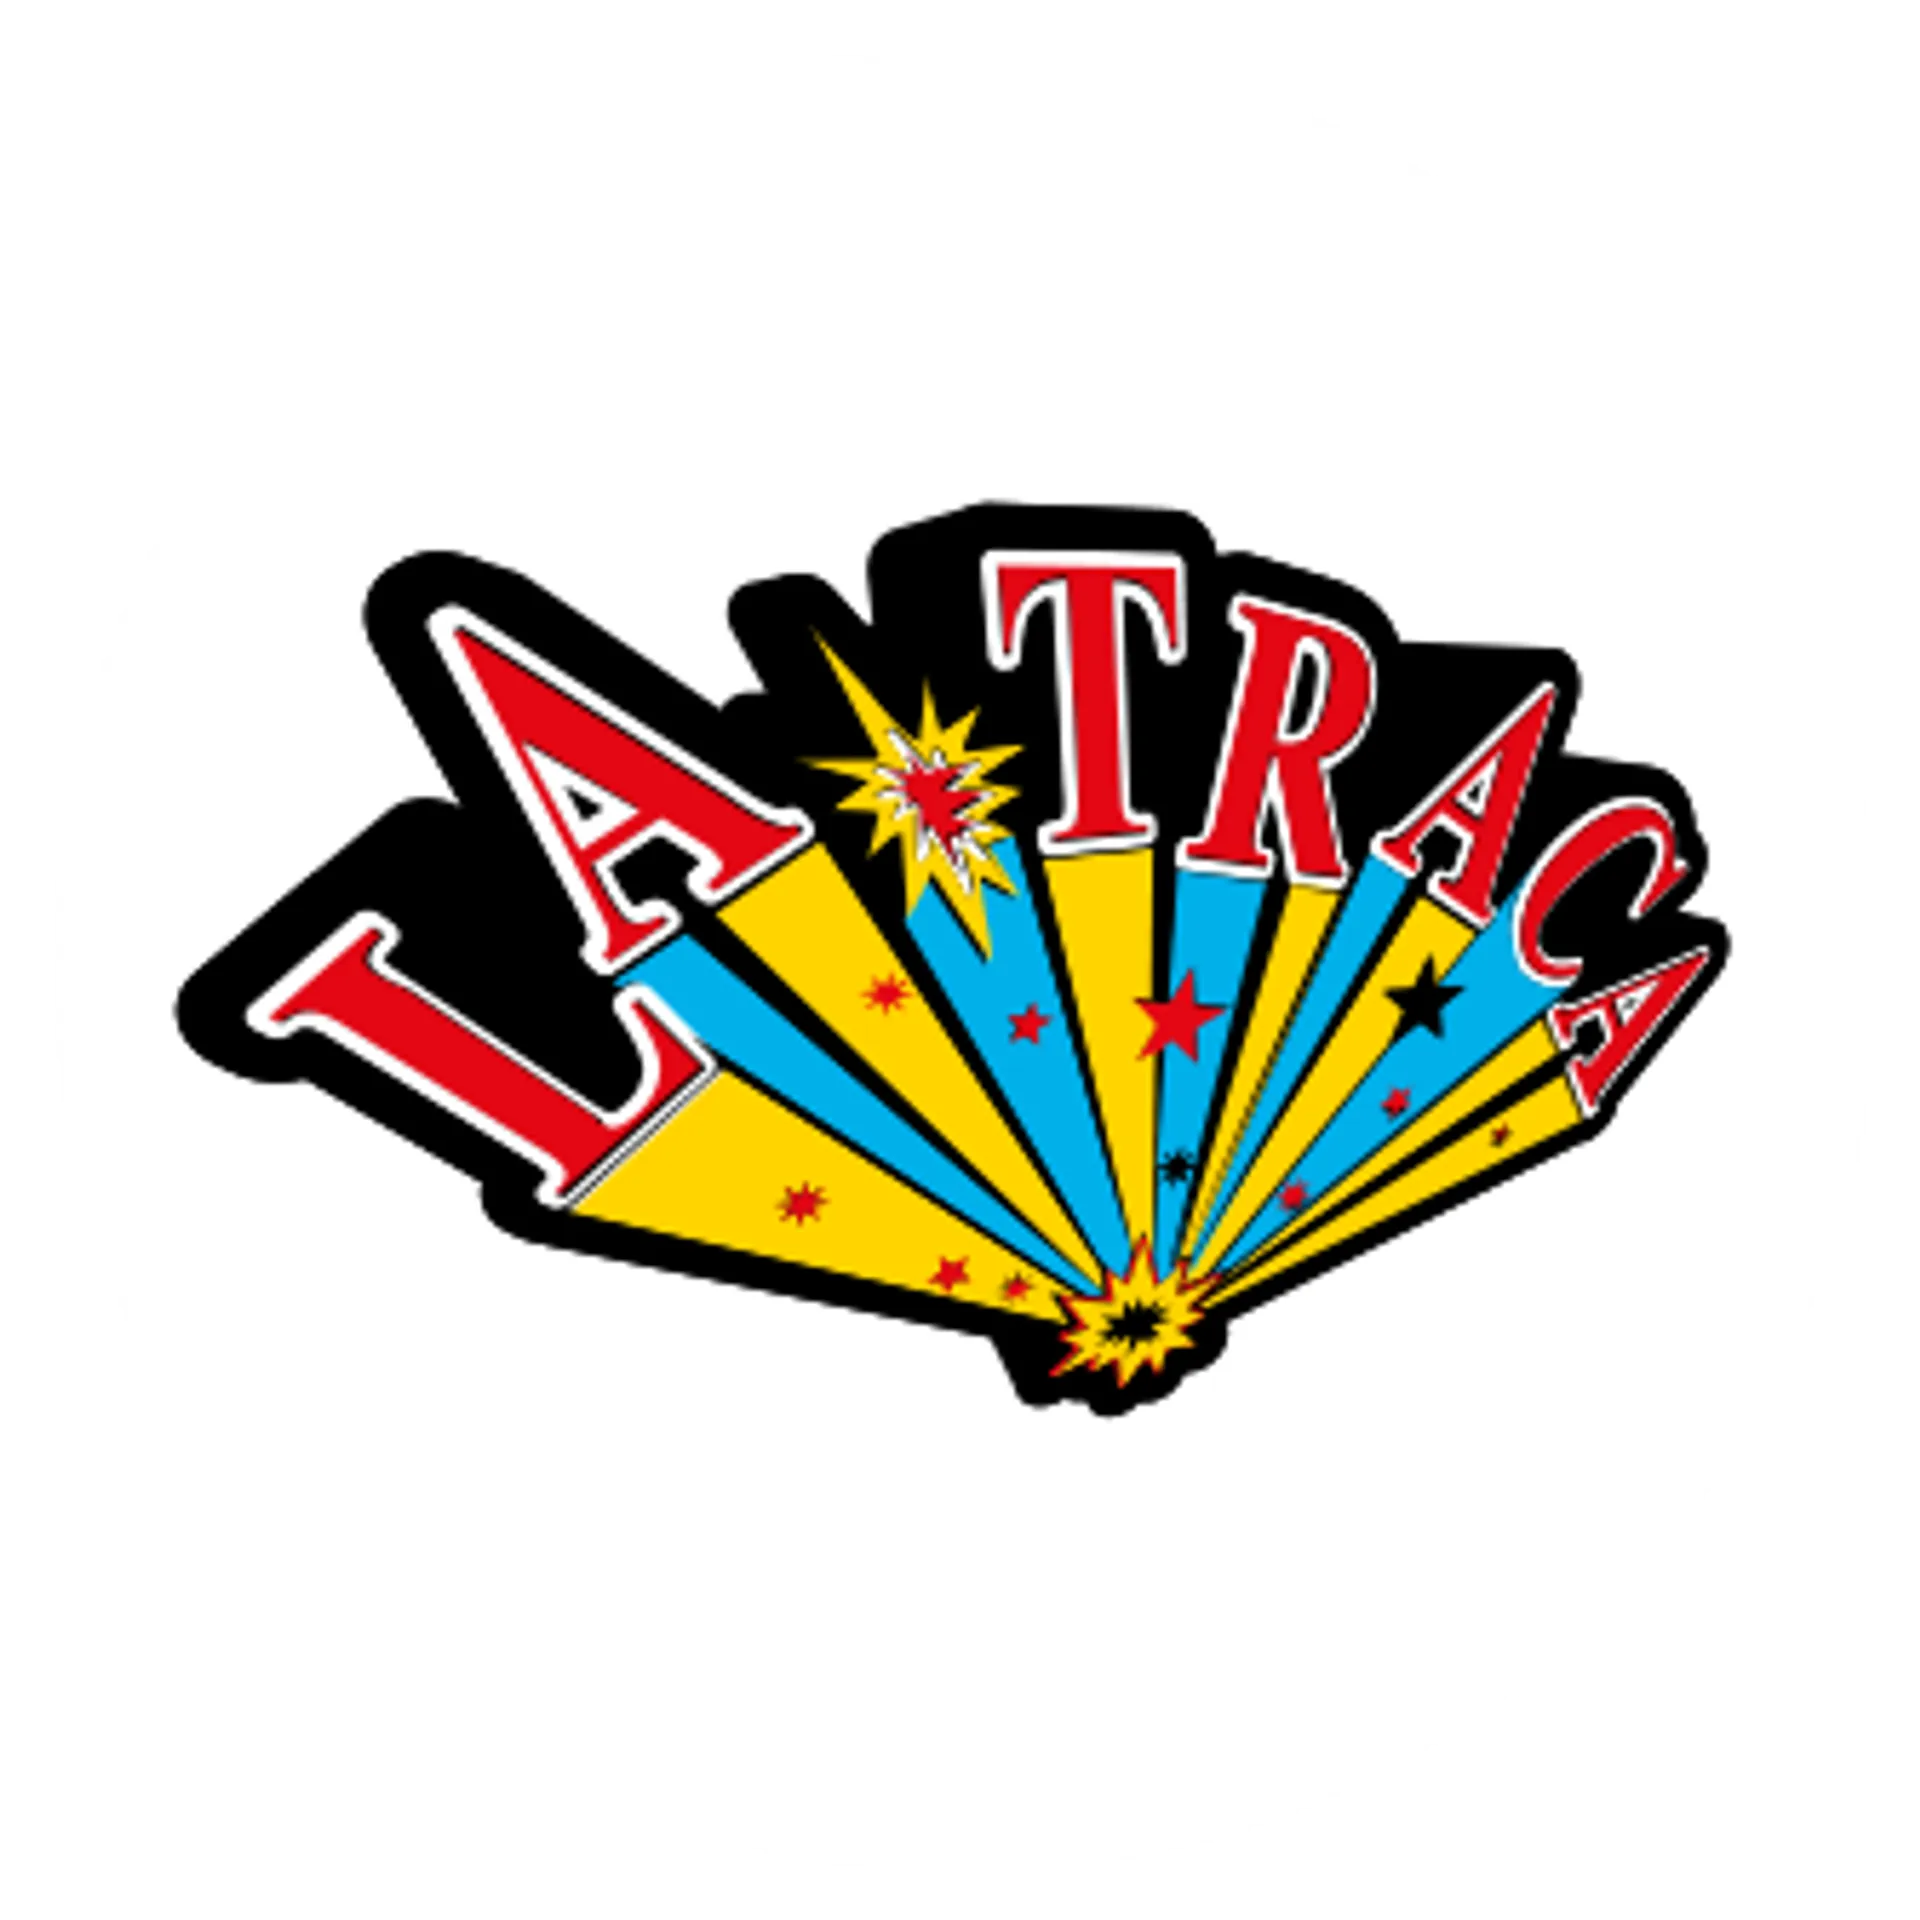 LA TRACA logo